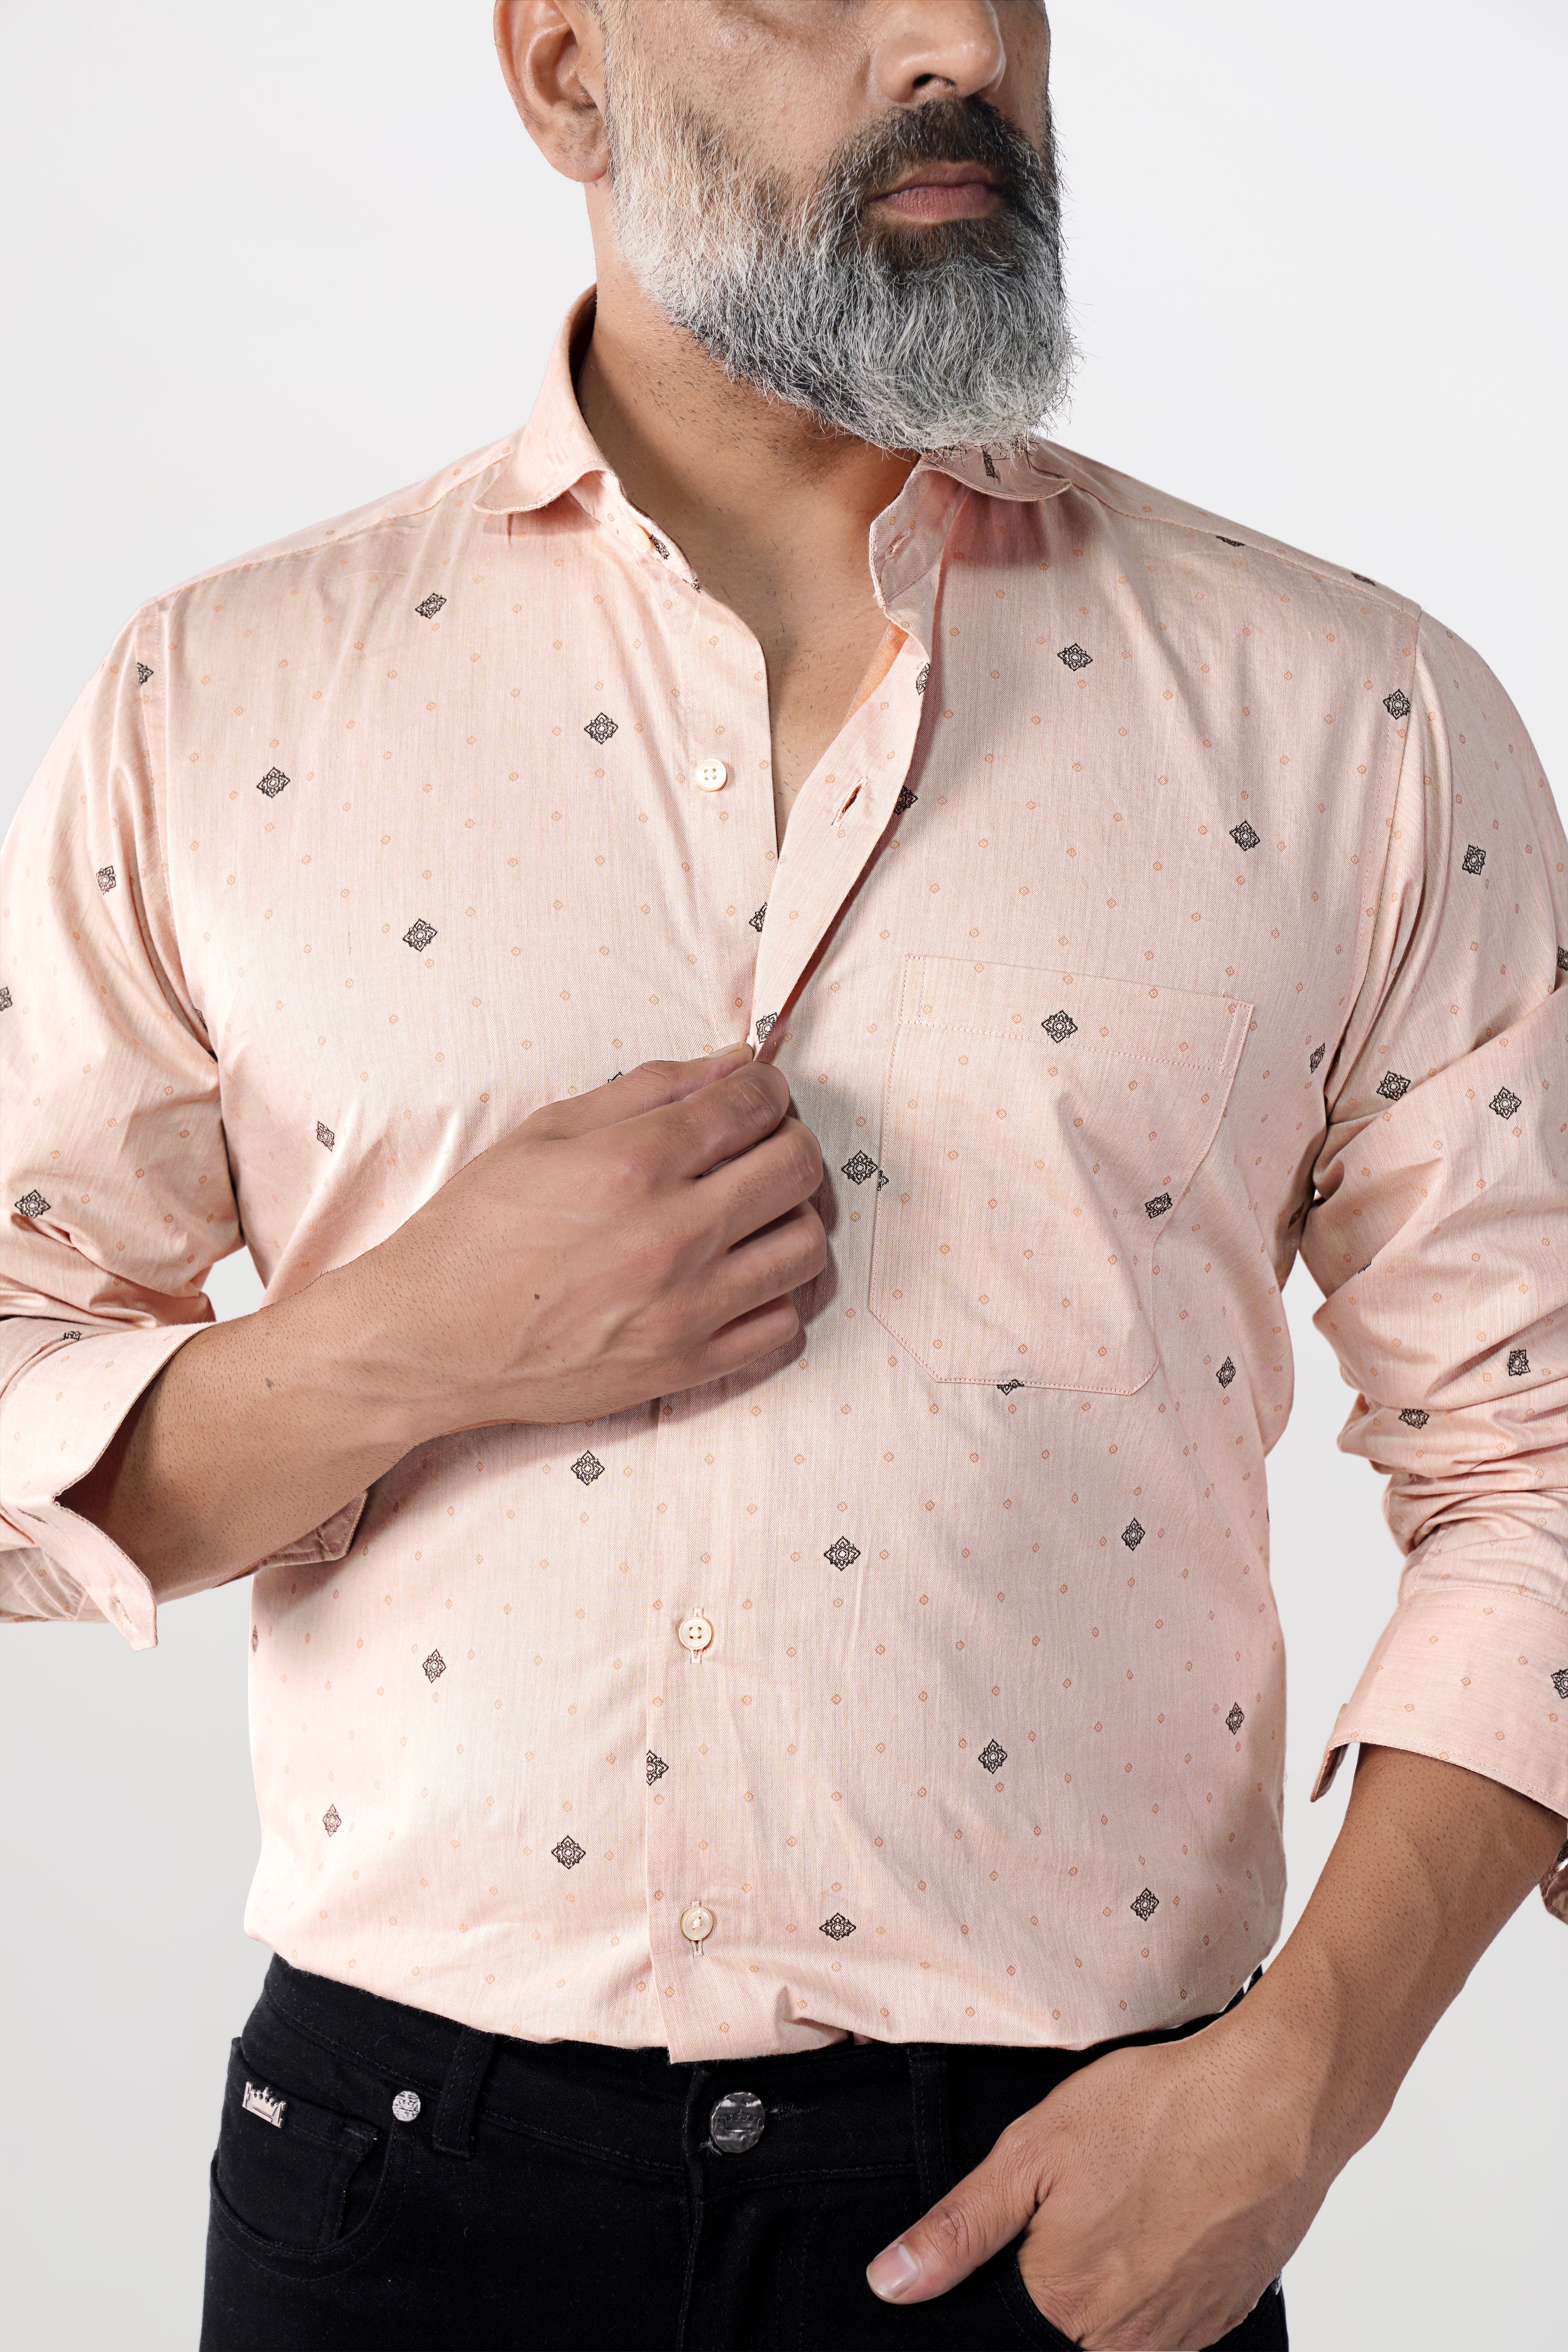 Soft Amber Peach with Pine Cone Brown Jacquard Textured Premium Giza Cotton Shirt